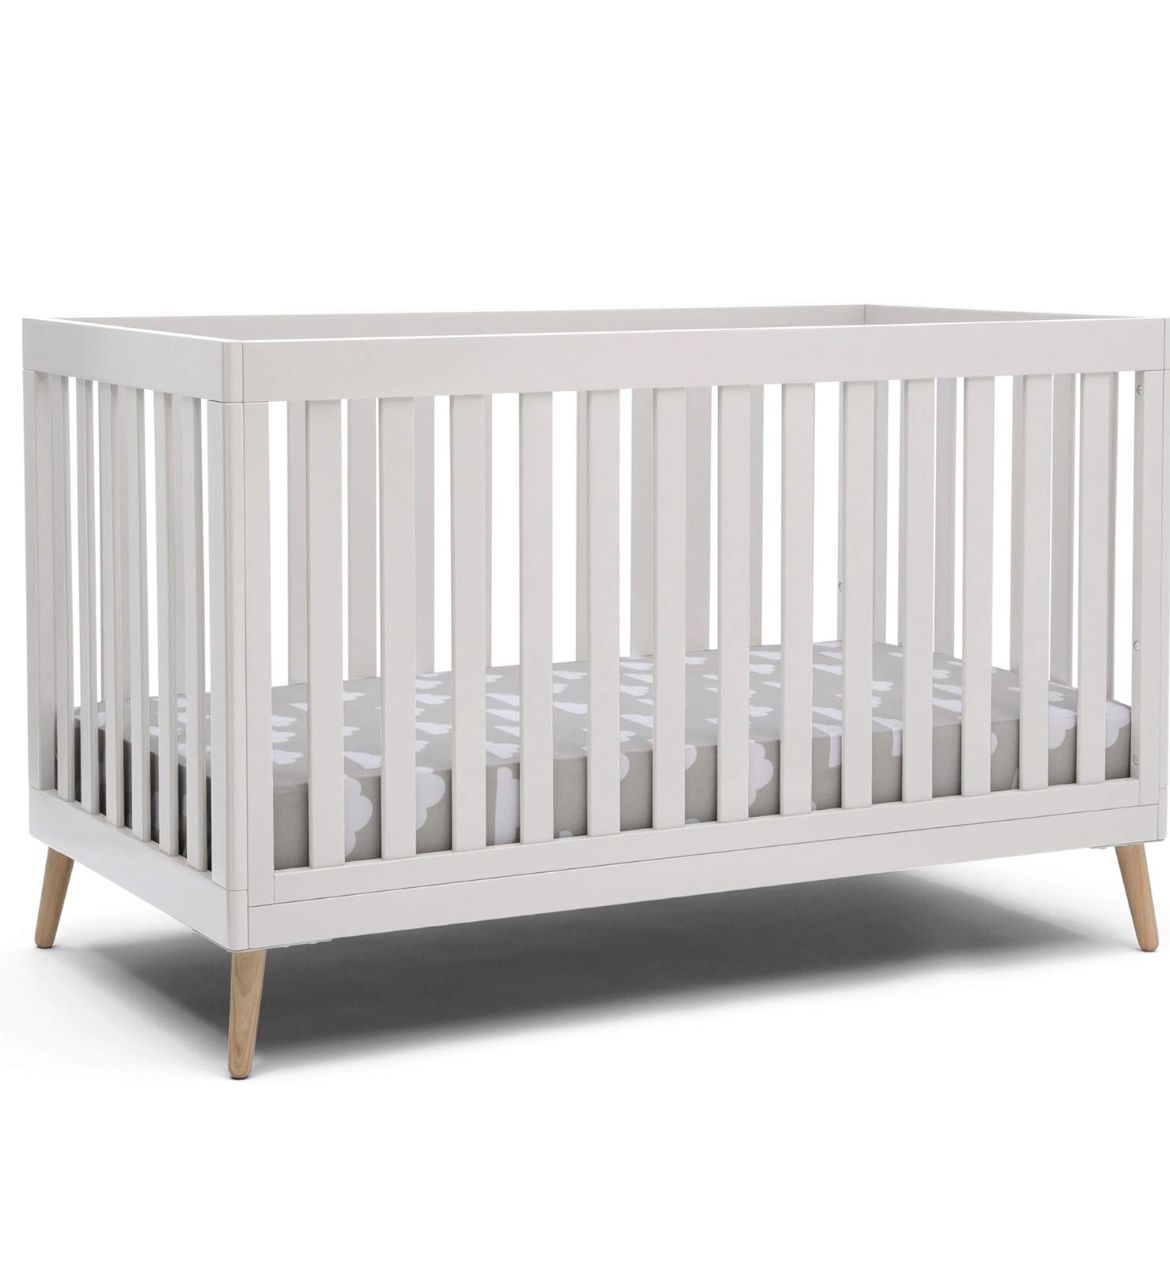 Delta Children Essex 4-in-1 Convertible Baby Crib, Bianca White with Natural Legs - BRAND NEW